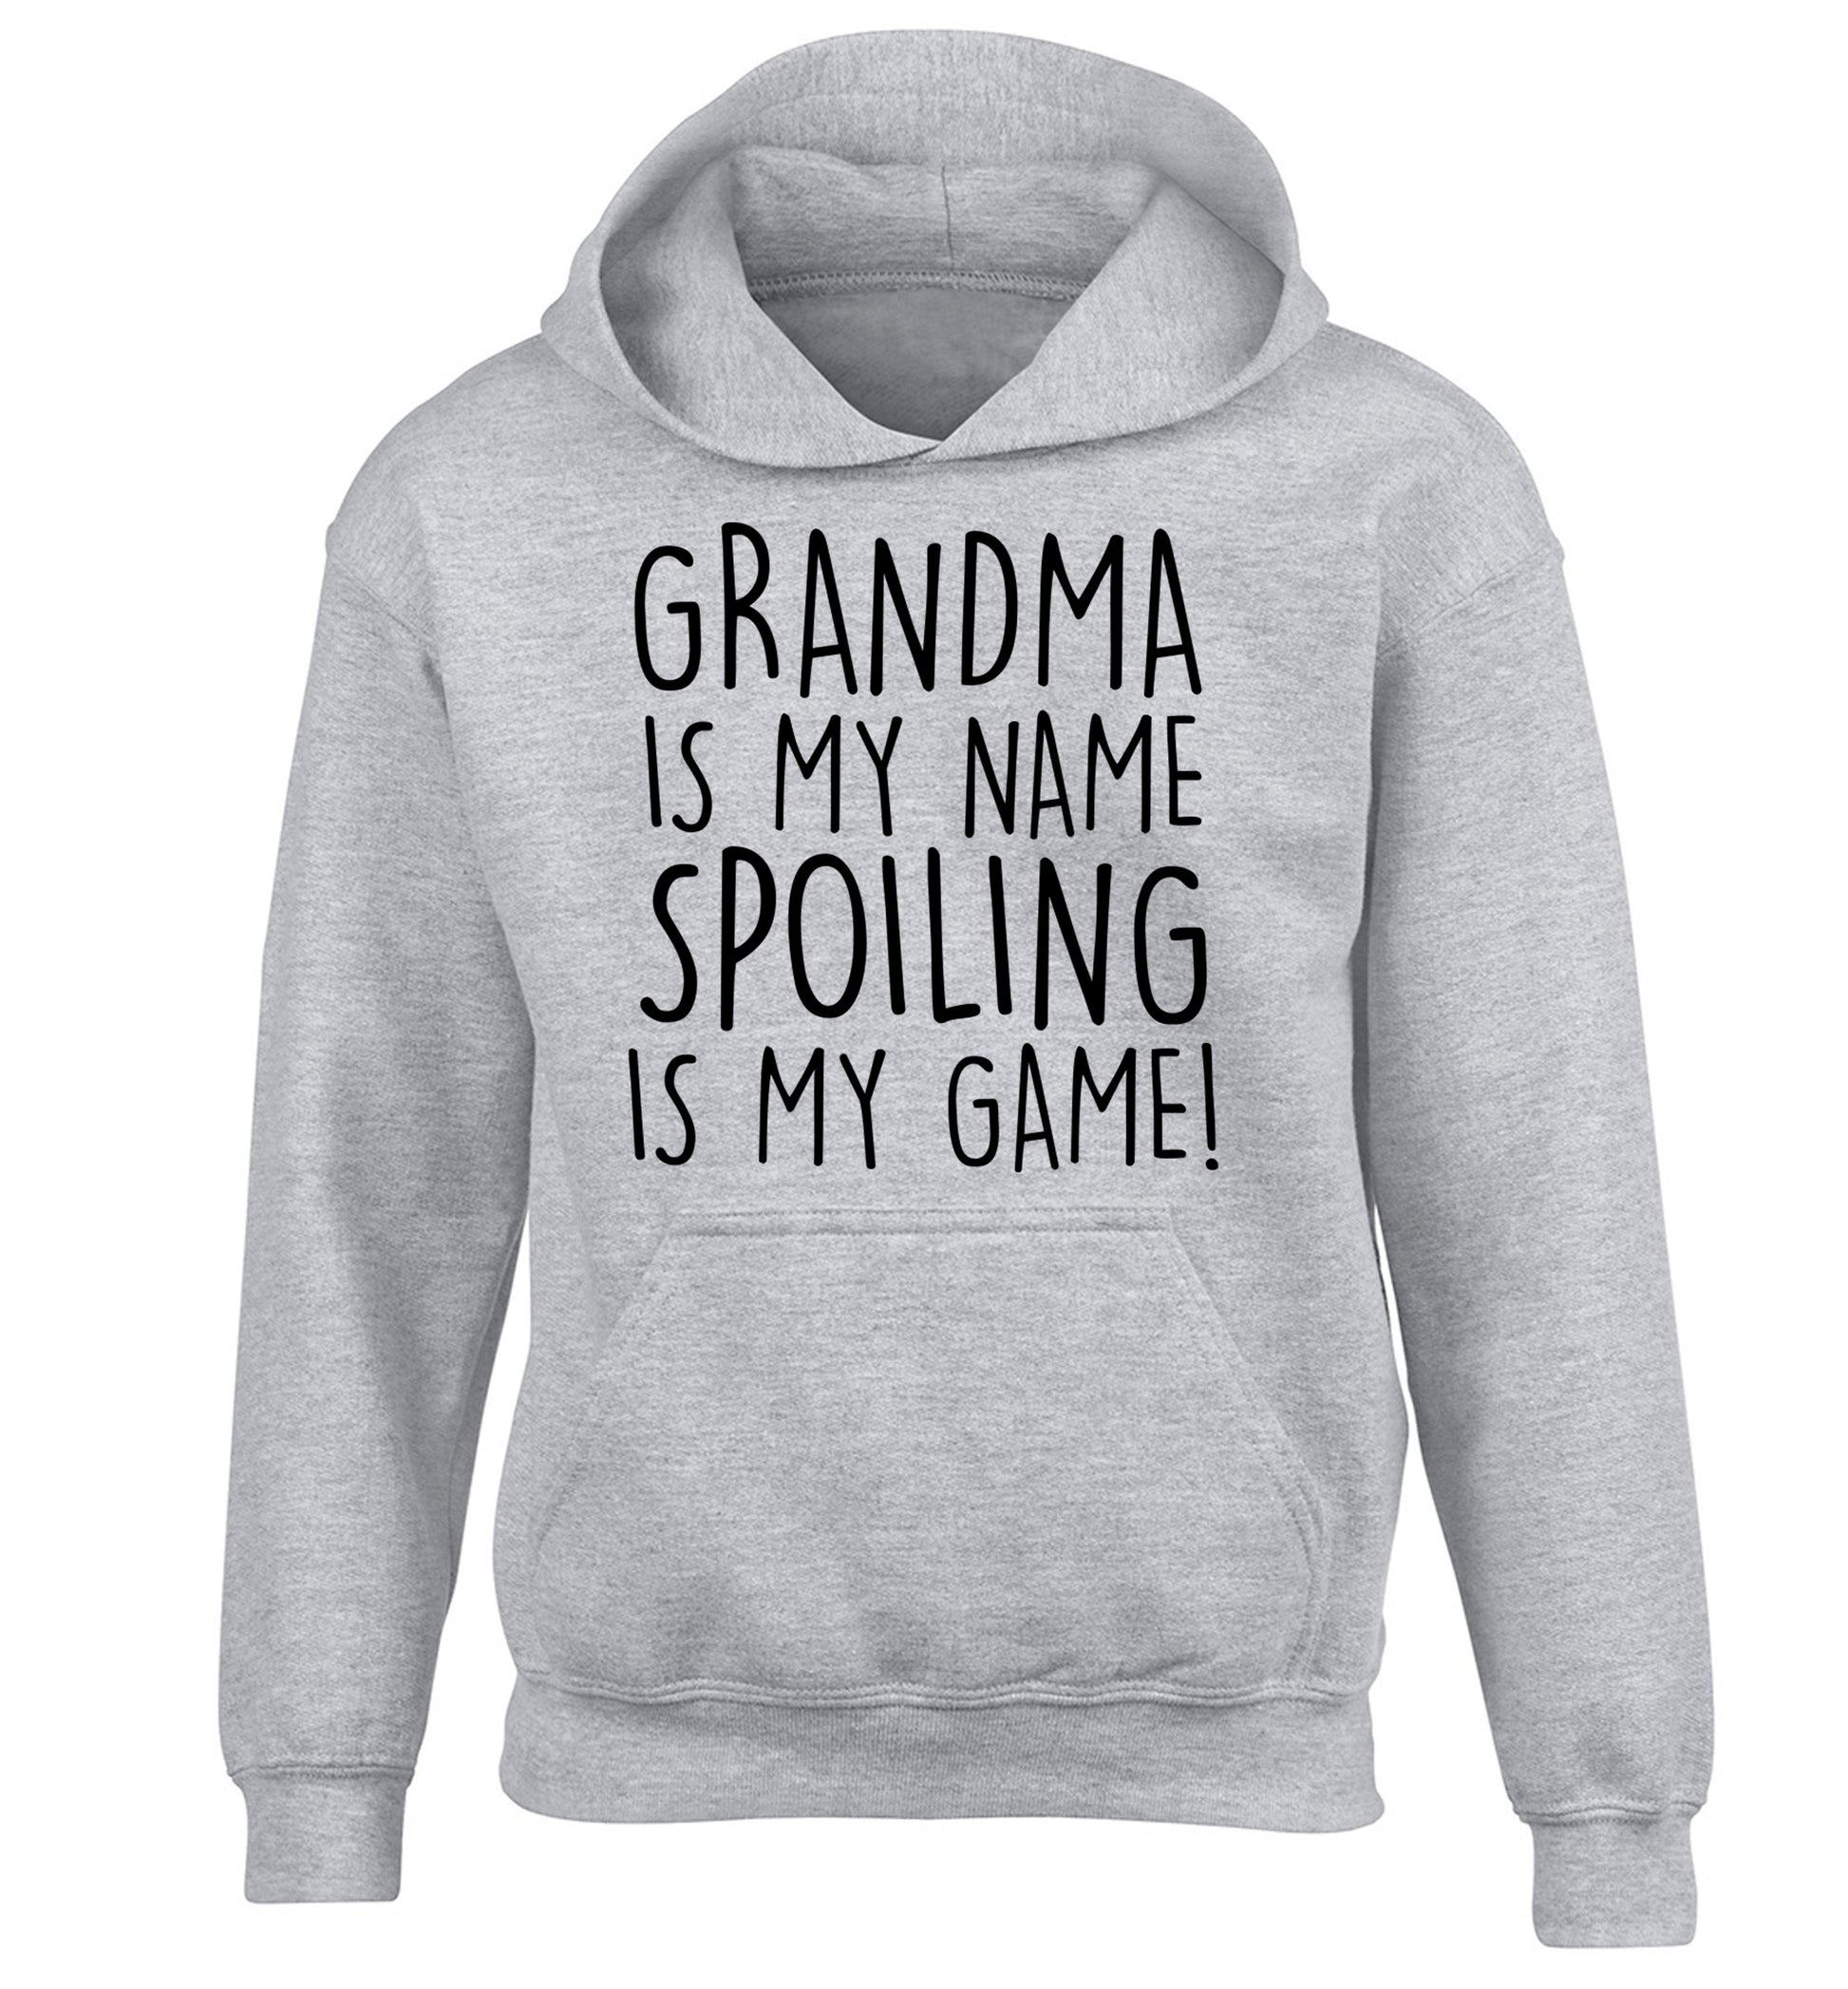 Grandma is my name, spoiling is my game children's grey hoodie 12-14 Years